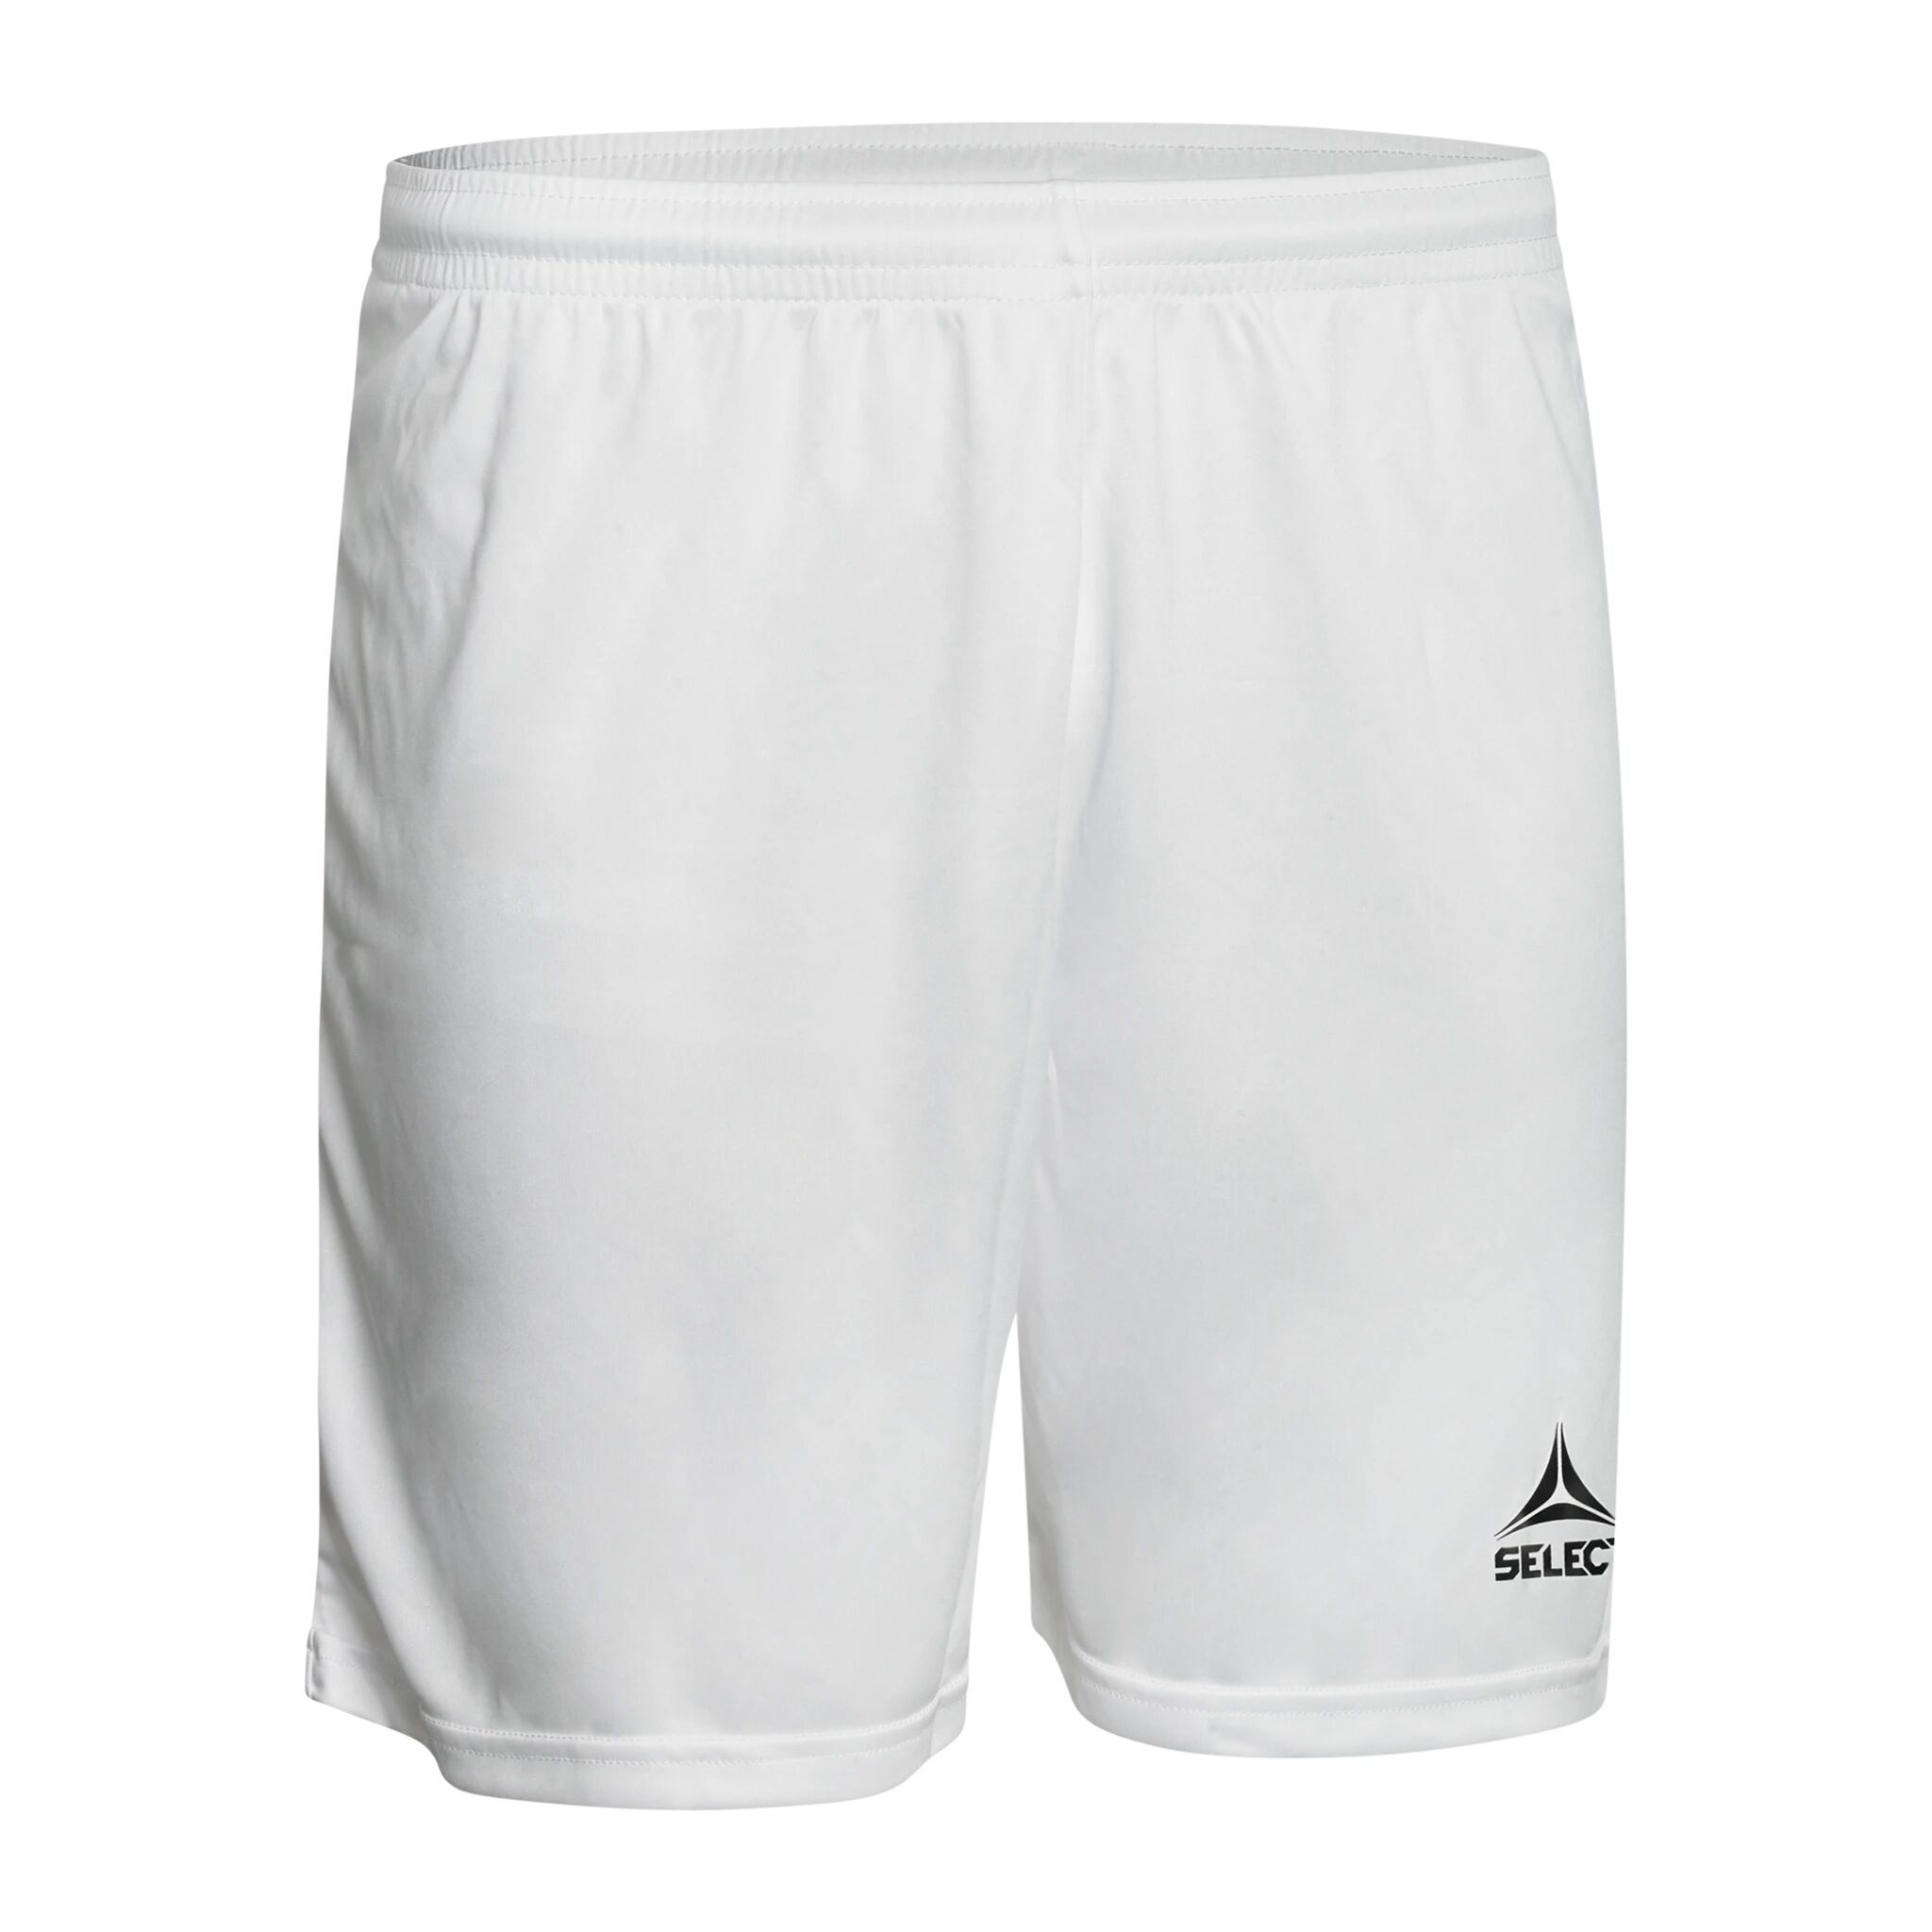 Select Player shorts Pisa, shorts senior 140 White